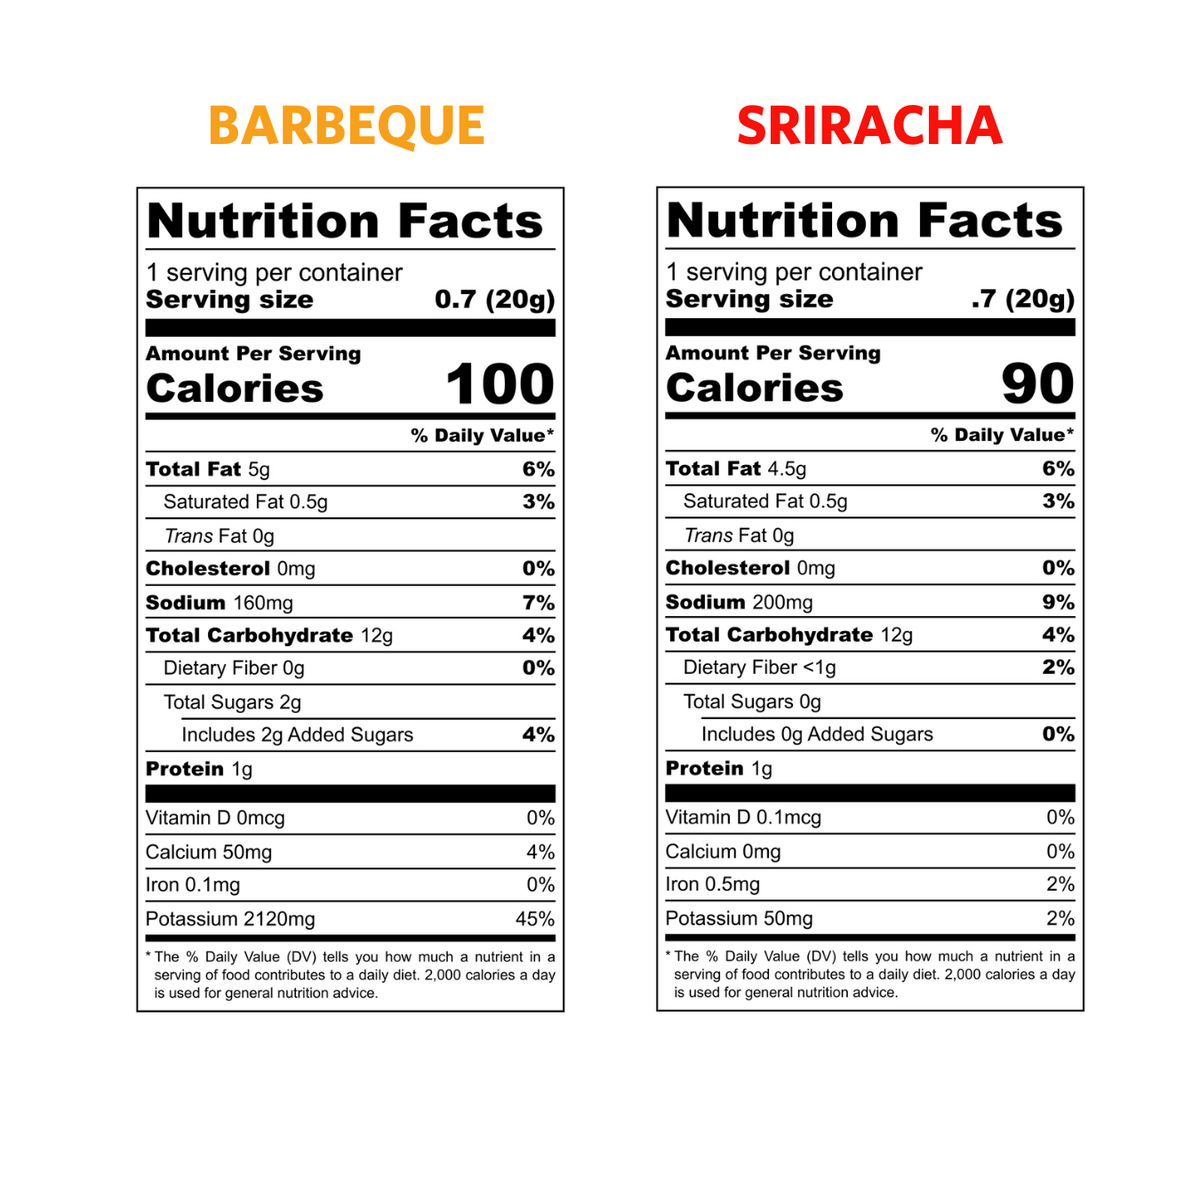 Barbeque Puffs 0.7oz nutrition label, 1 serving per container, 100 calories per bag. Sriracha Puffs 0.7oz nutrition label, 1 serving per container, 90 calories per bag.